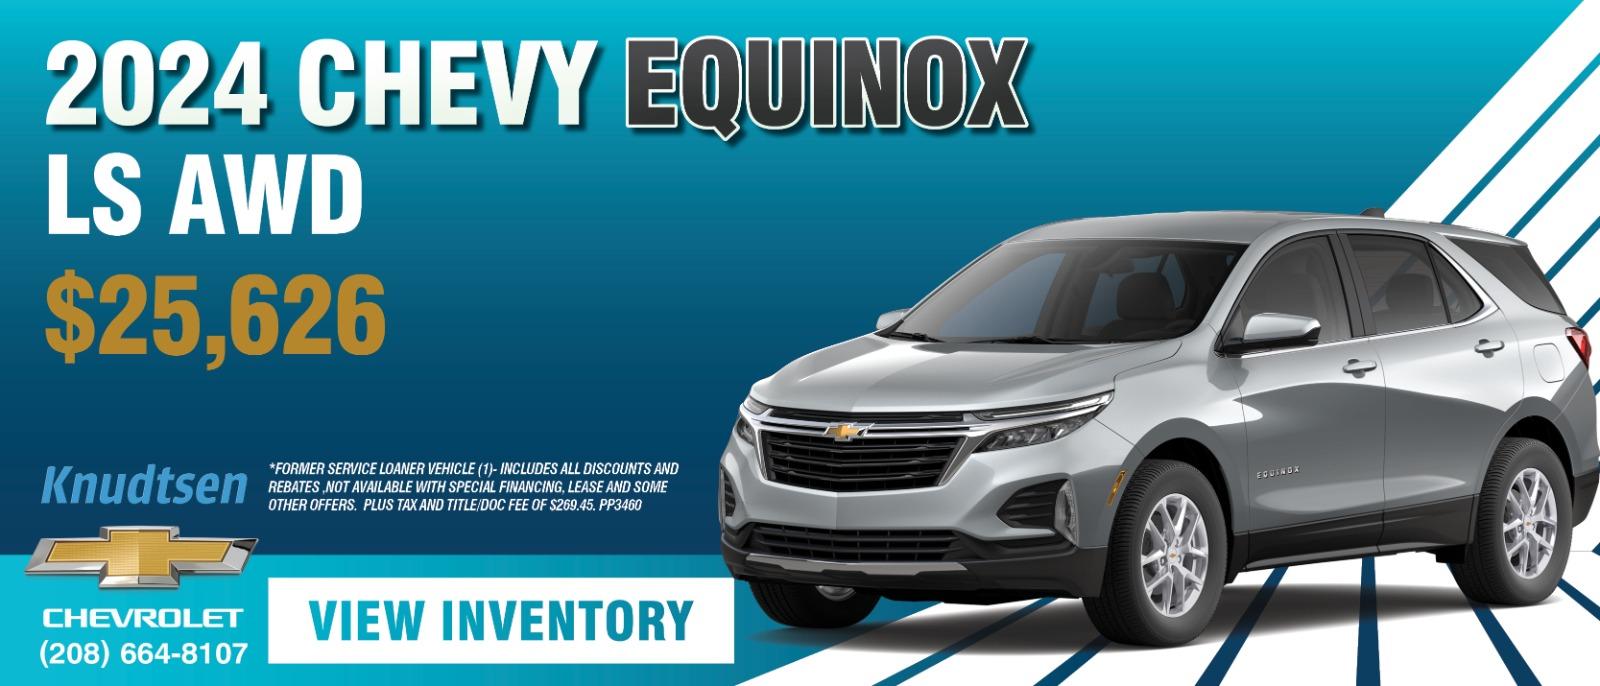 2024 CHEVY EQUINOX LS AWD
LS AWD $25,626